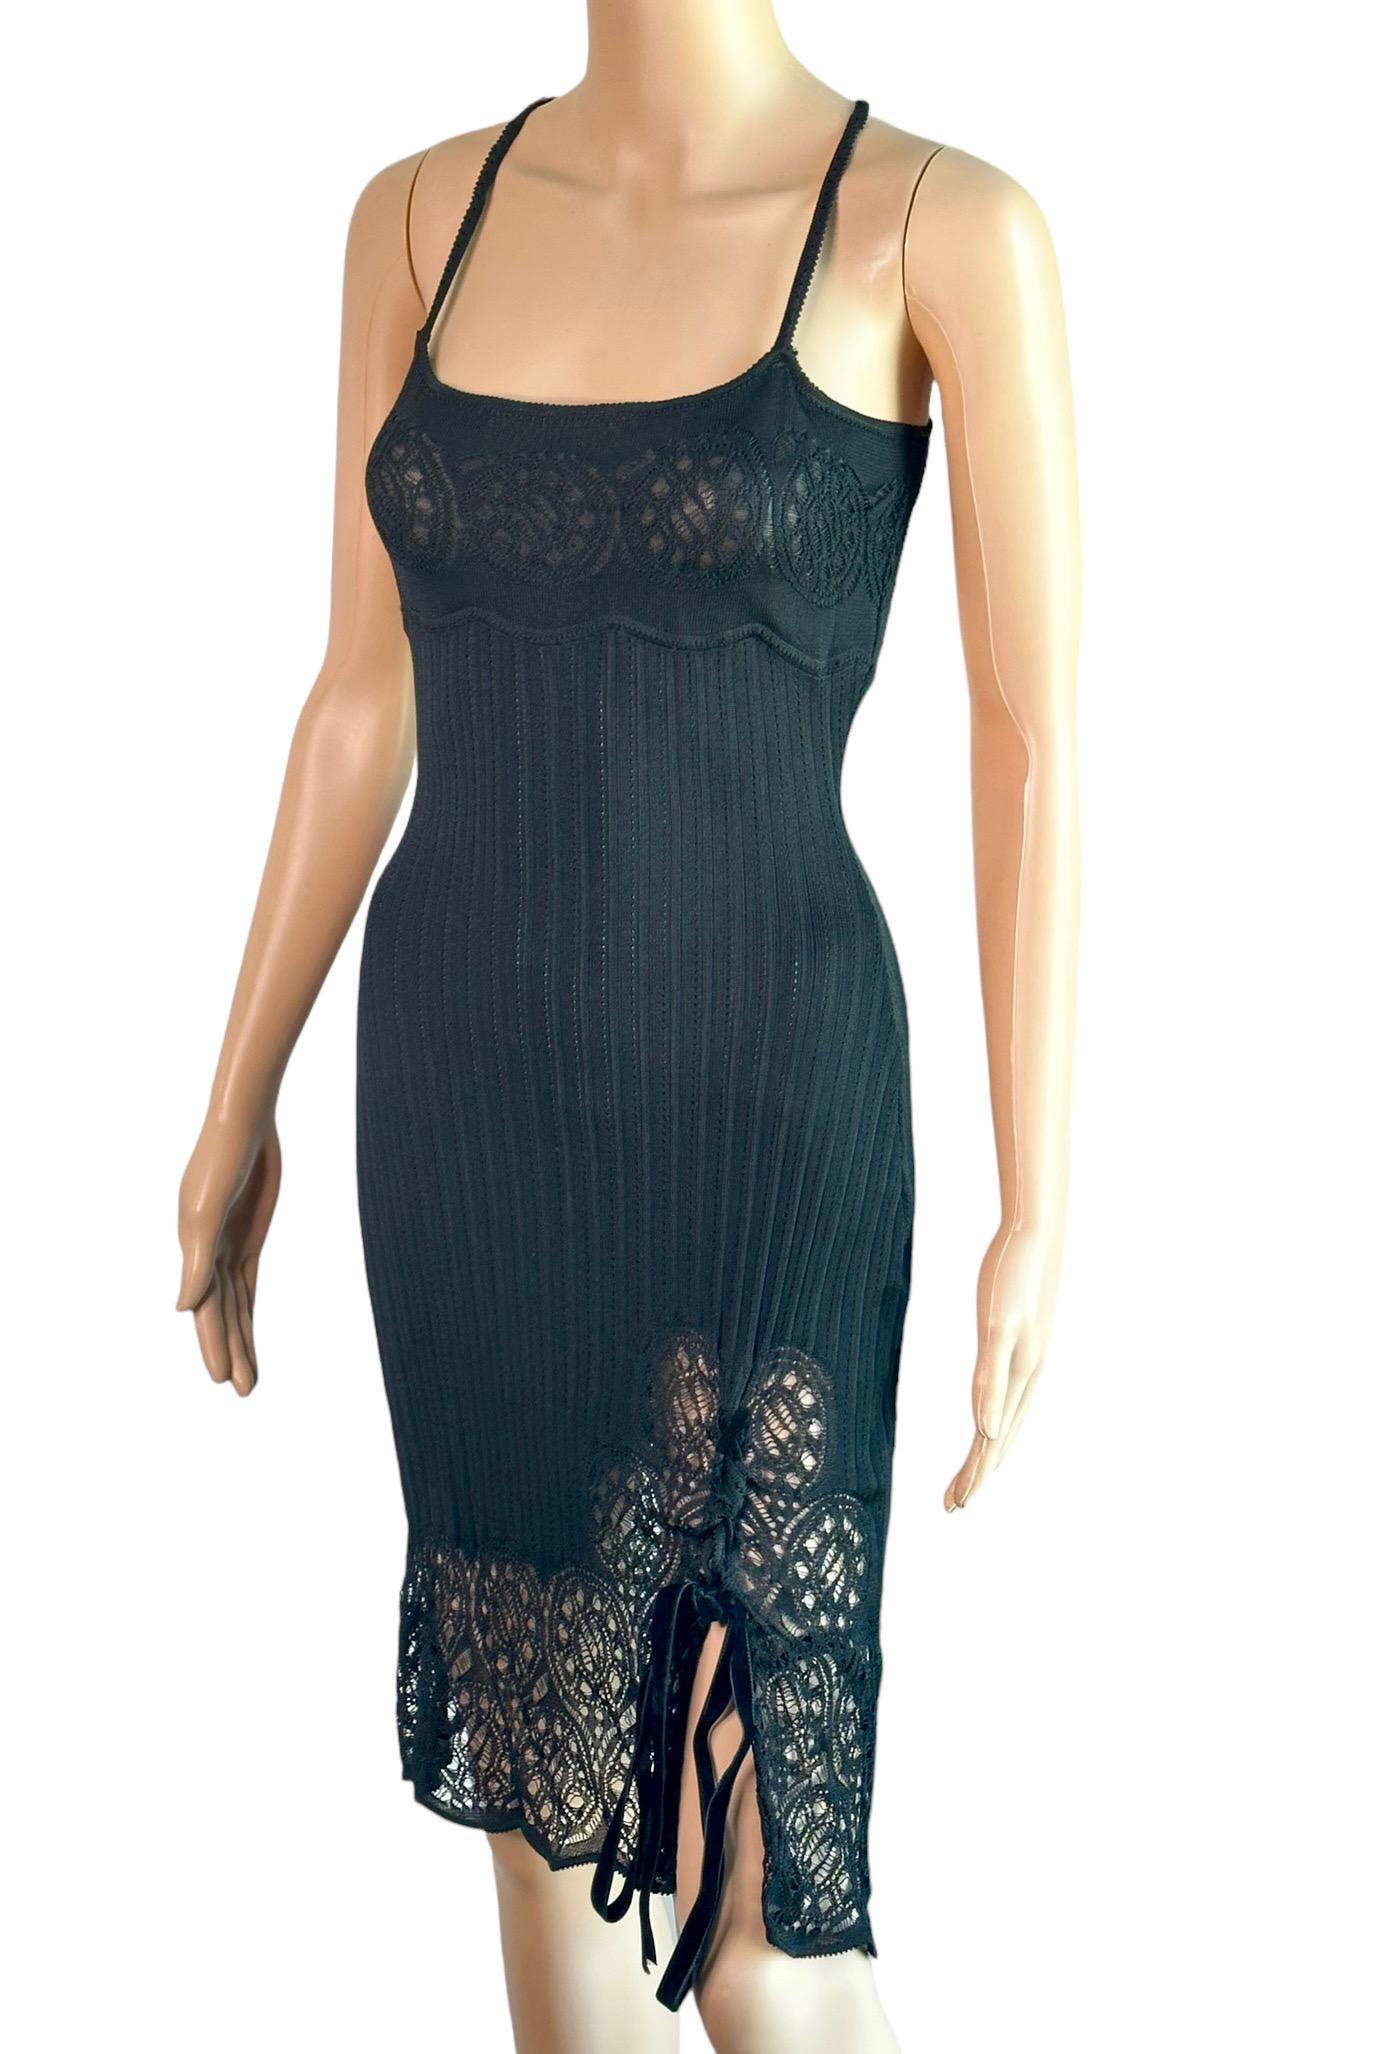 John Galliano S/S 1999 - Mini robe noire en dentelle transparente ouverte en vente 5